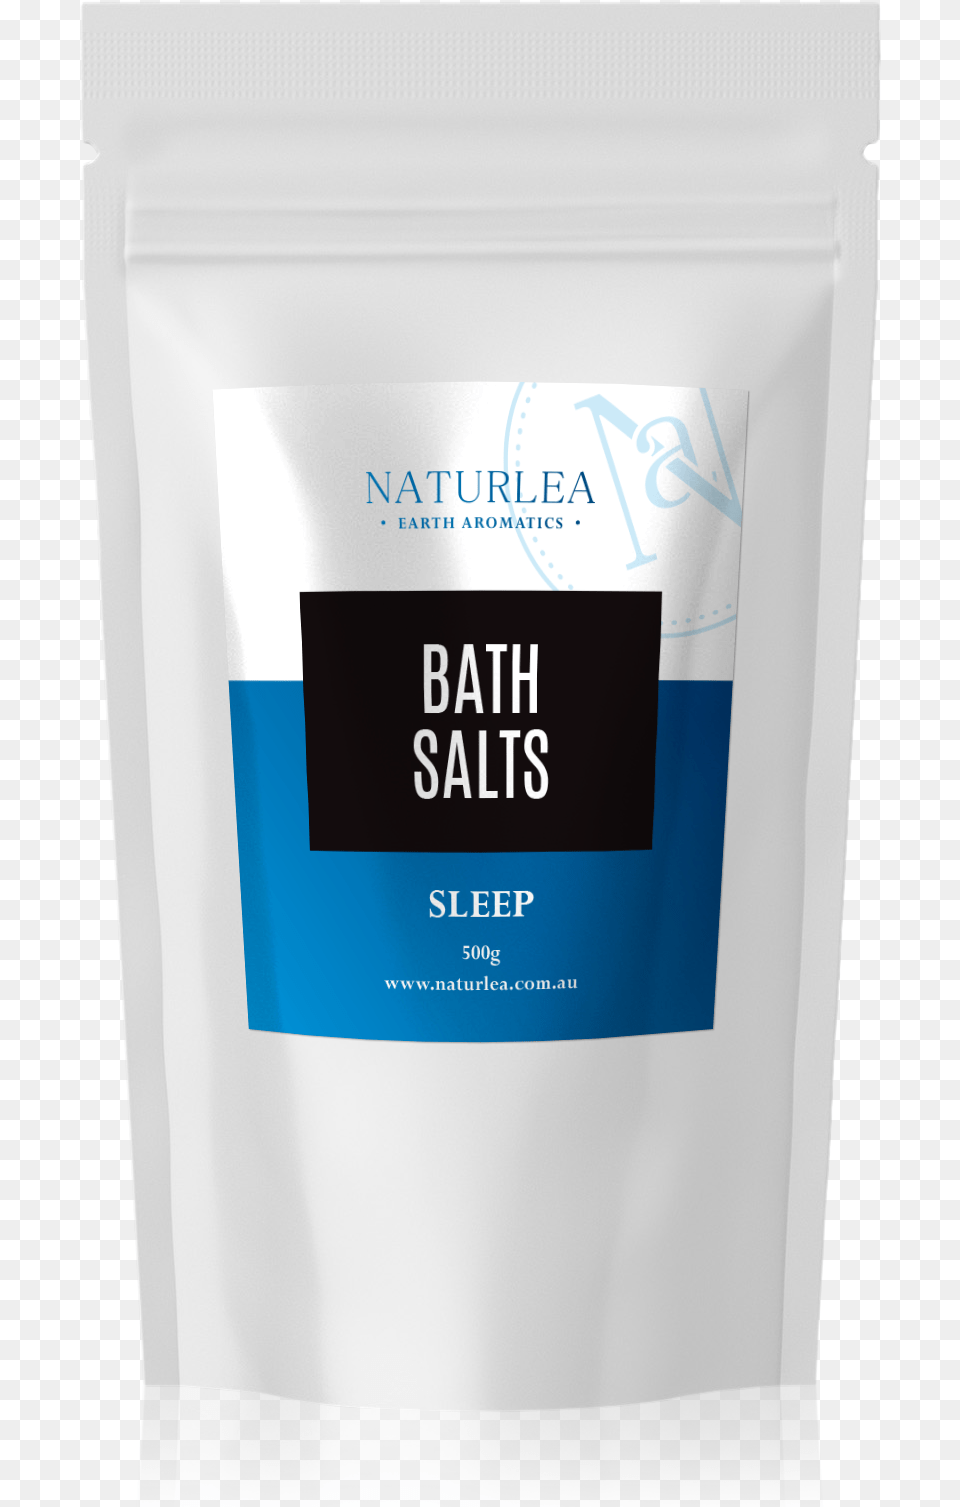 Sleep Bath Salt 500g Paper Bag, Bottle, Business Card, Text Free Png Download